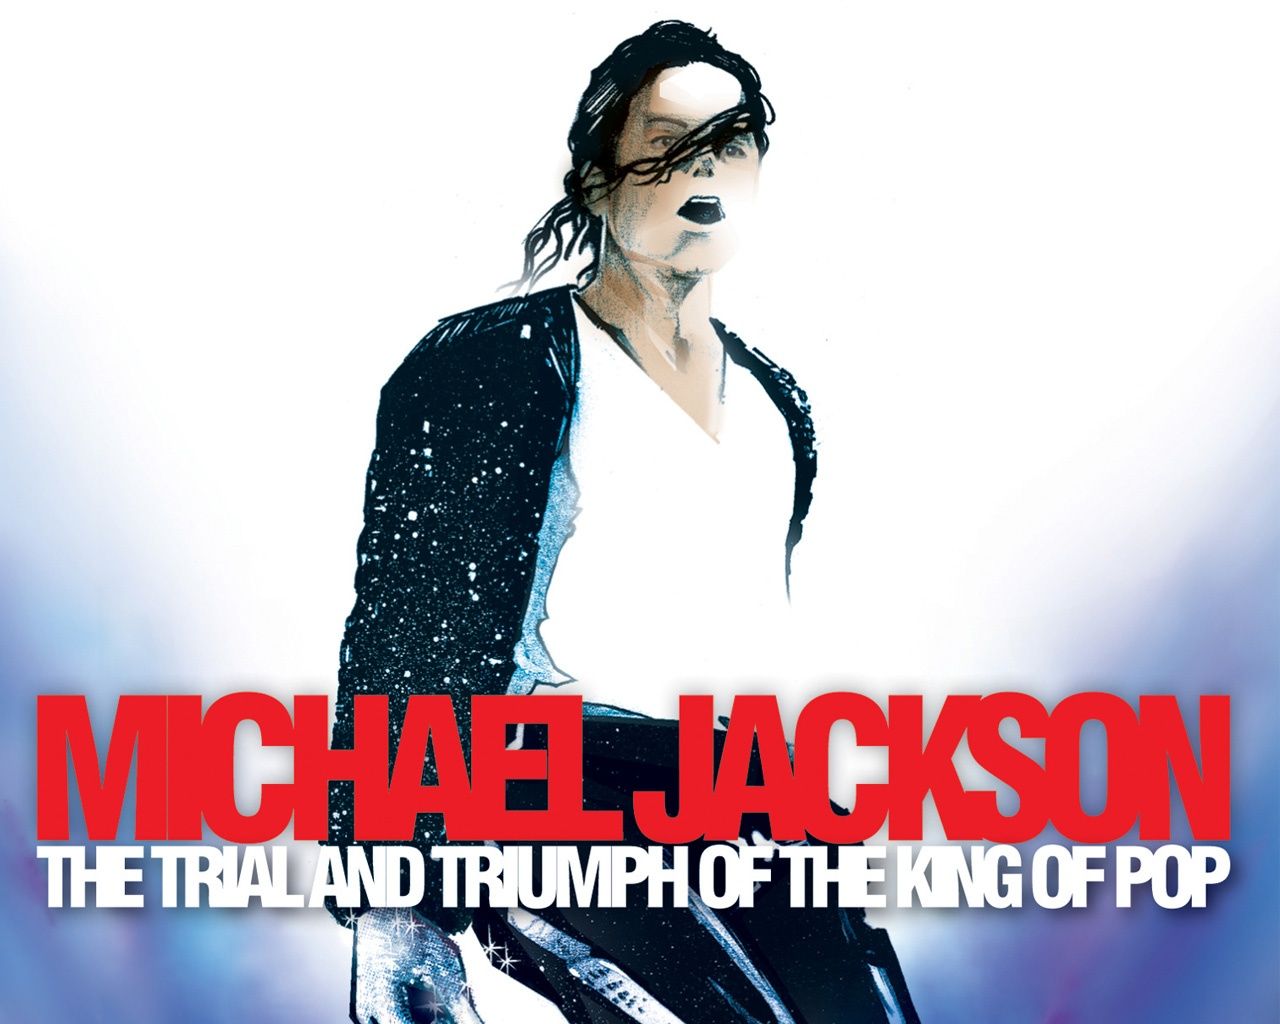 King of Pop Michael Jackson Wallpaper in jpg format for free download